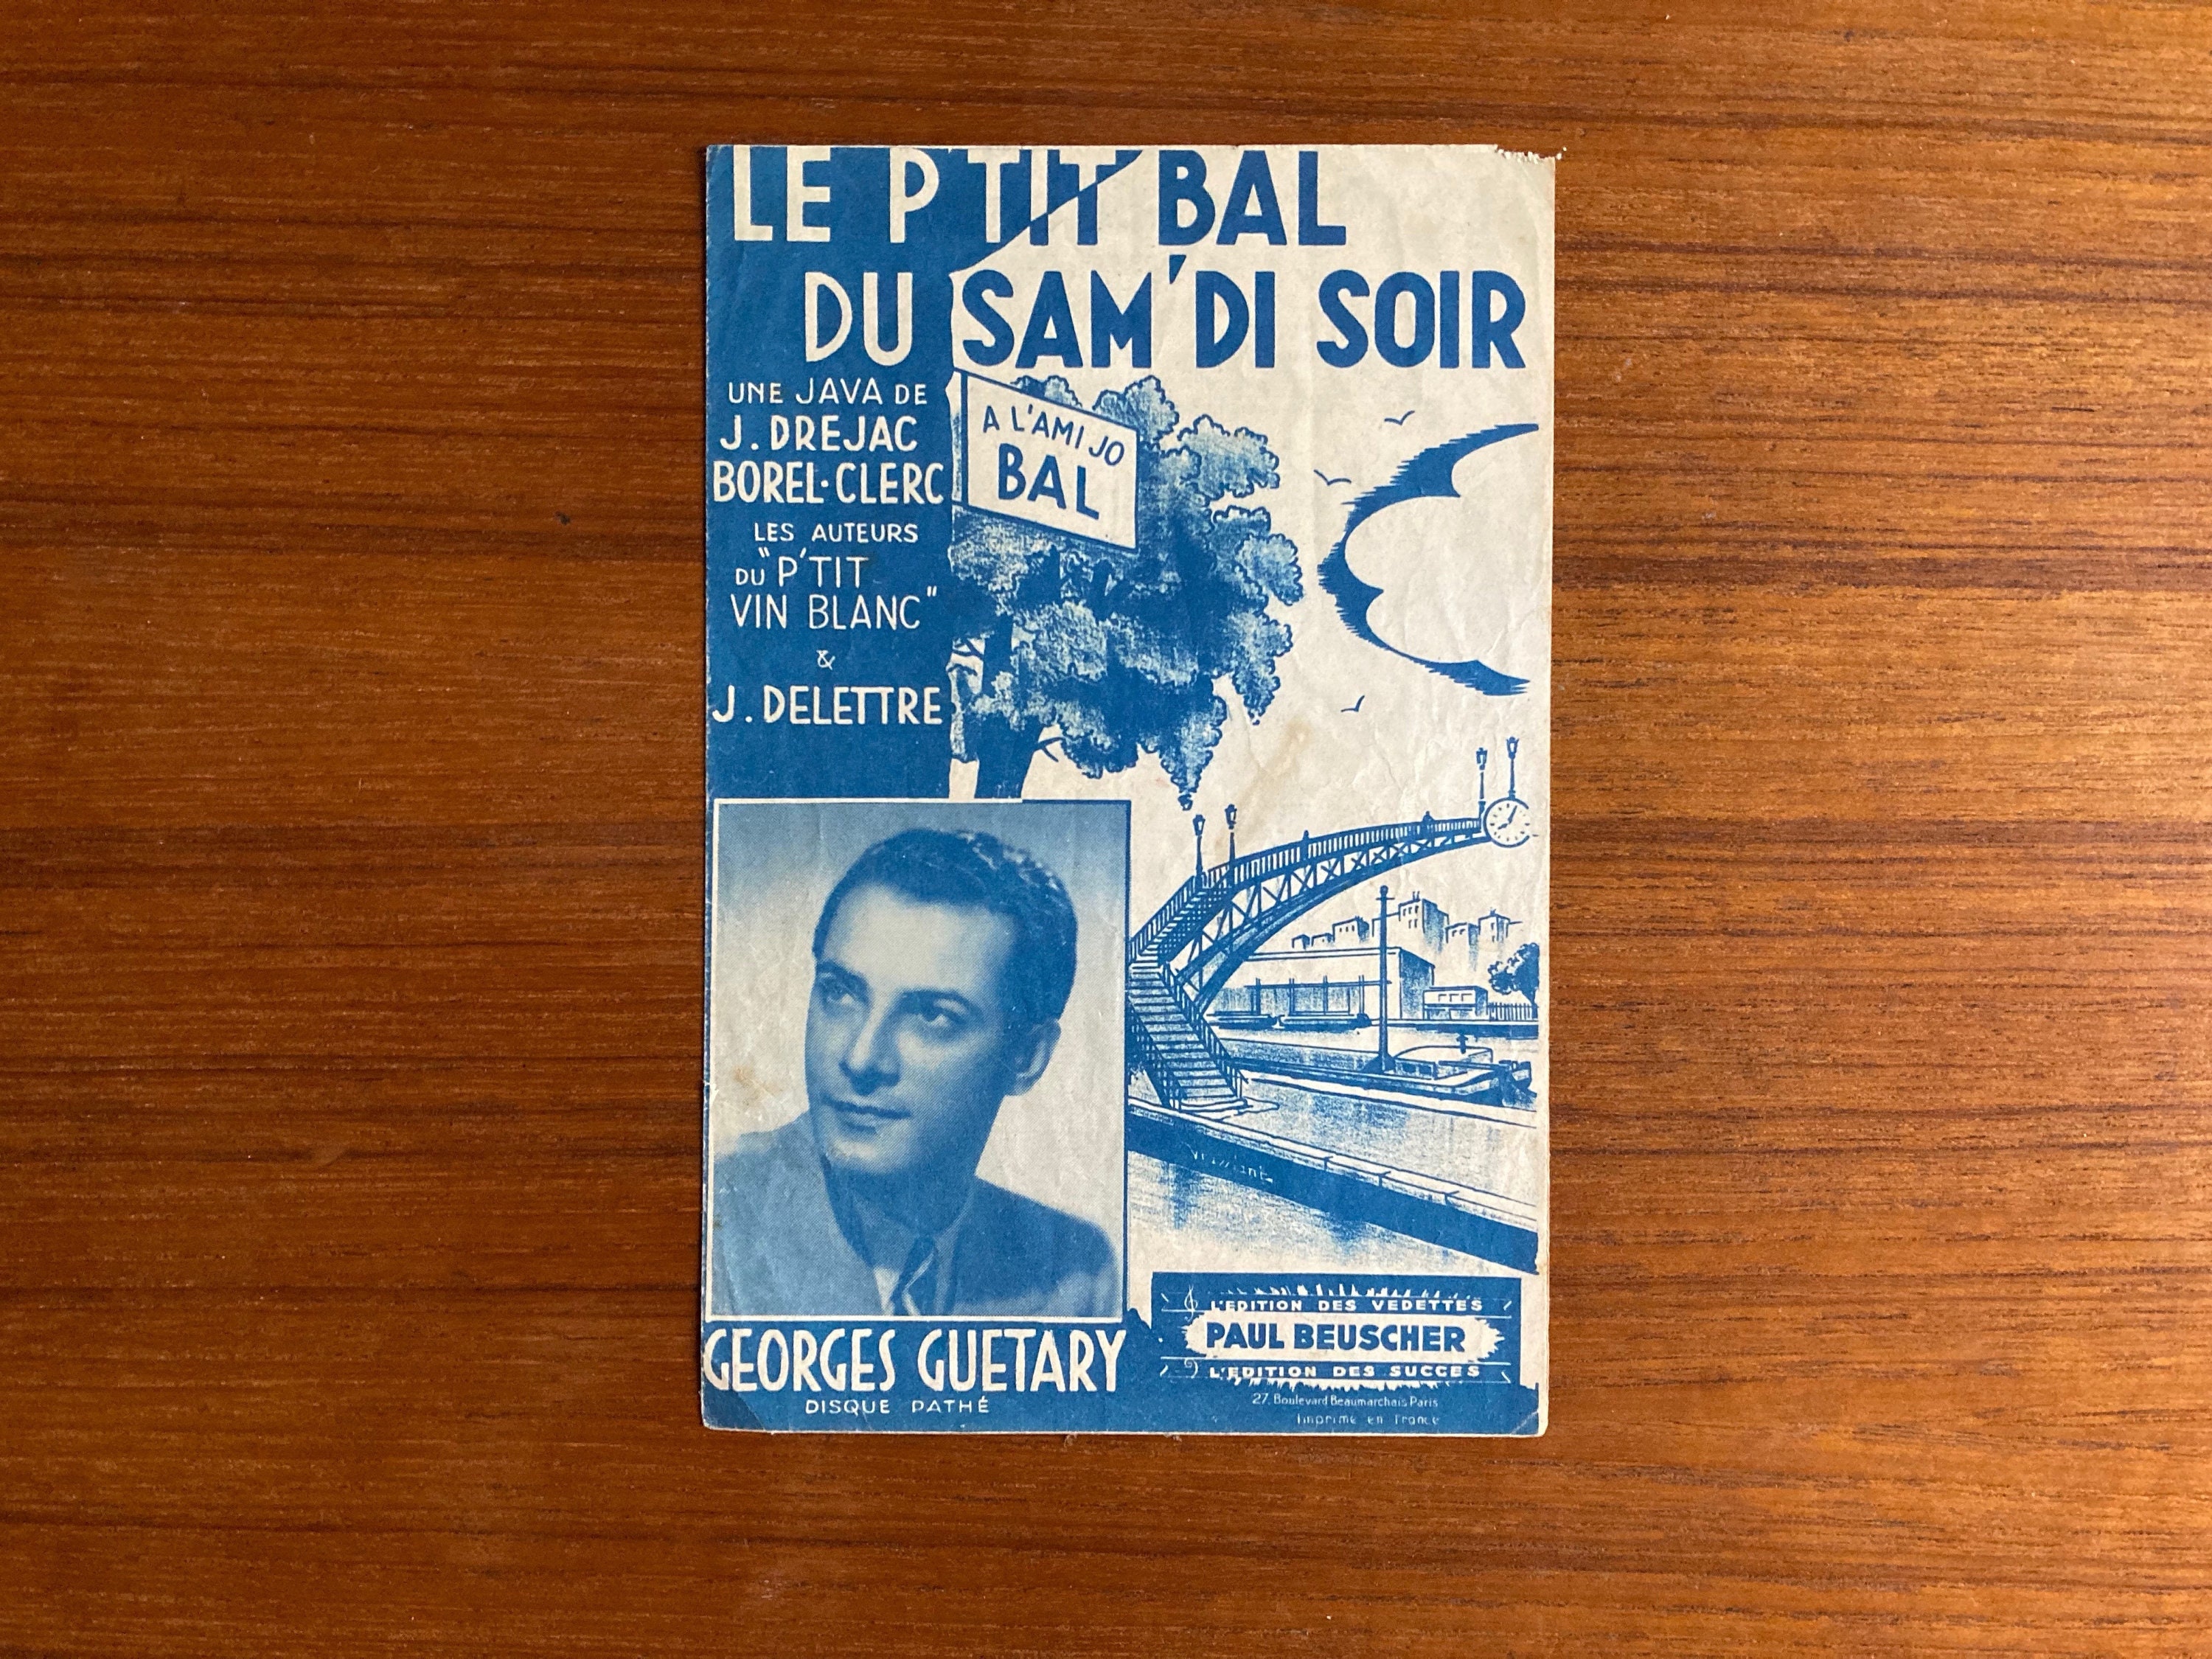 Partition Ancienne Georges Guetary Le P'tit Bal Du Sam'di Soir French Vintage Java Song